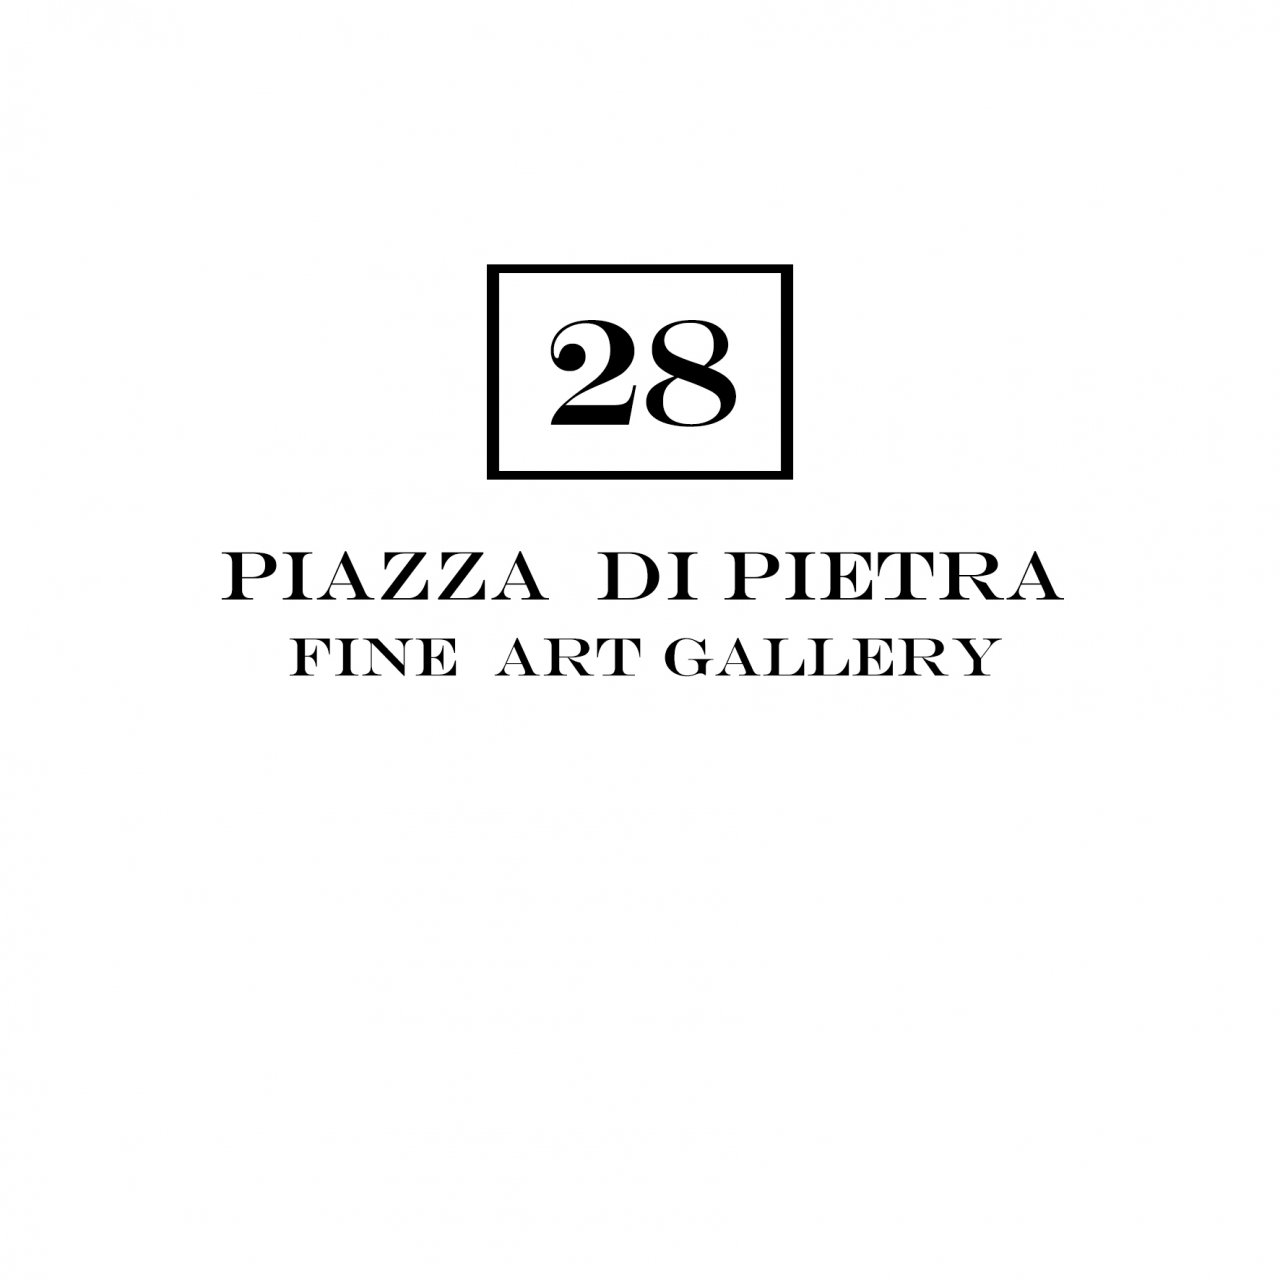 28 Piazza di Pietra - Fine Art Gallery